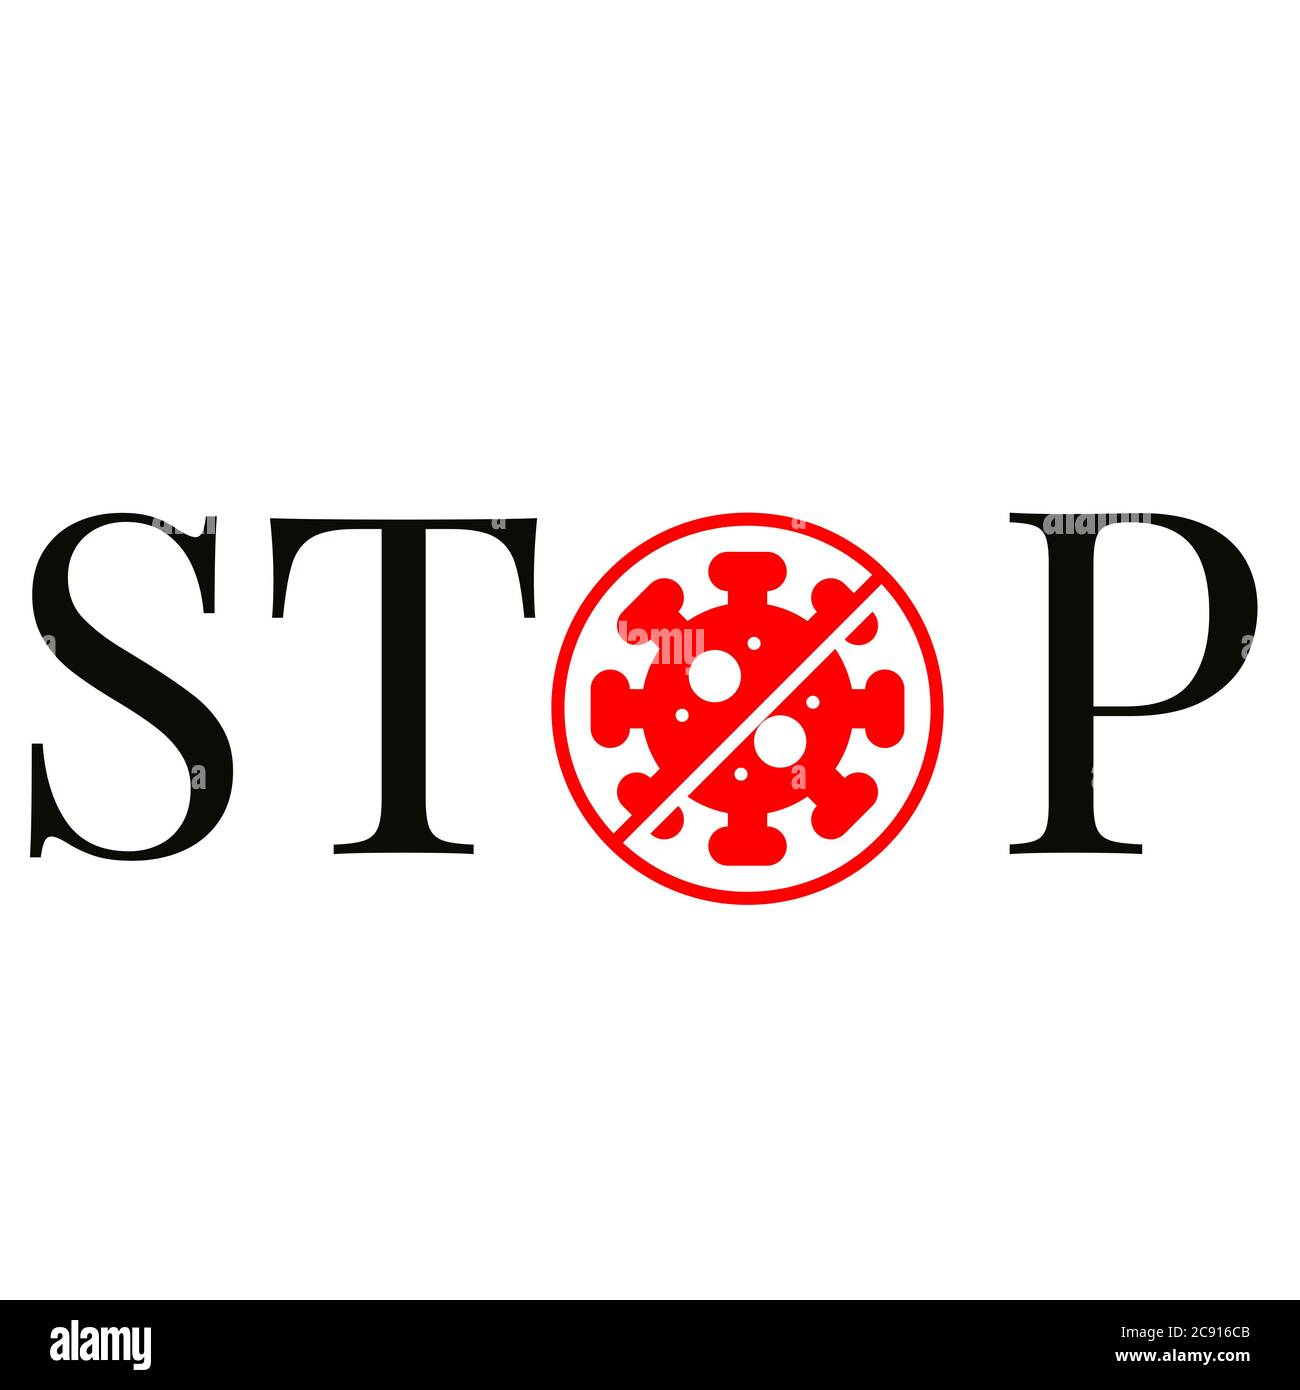 Stop Corona virus illustration with white background. Stop Corona virus rendering. Stock Photo